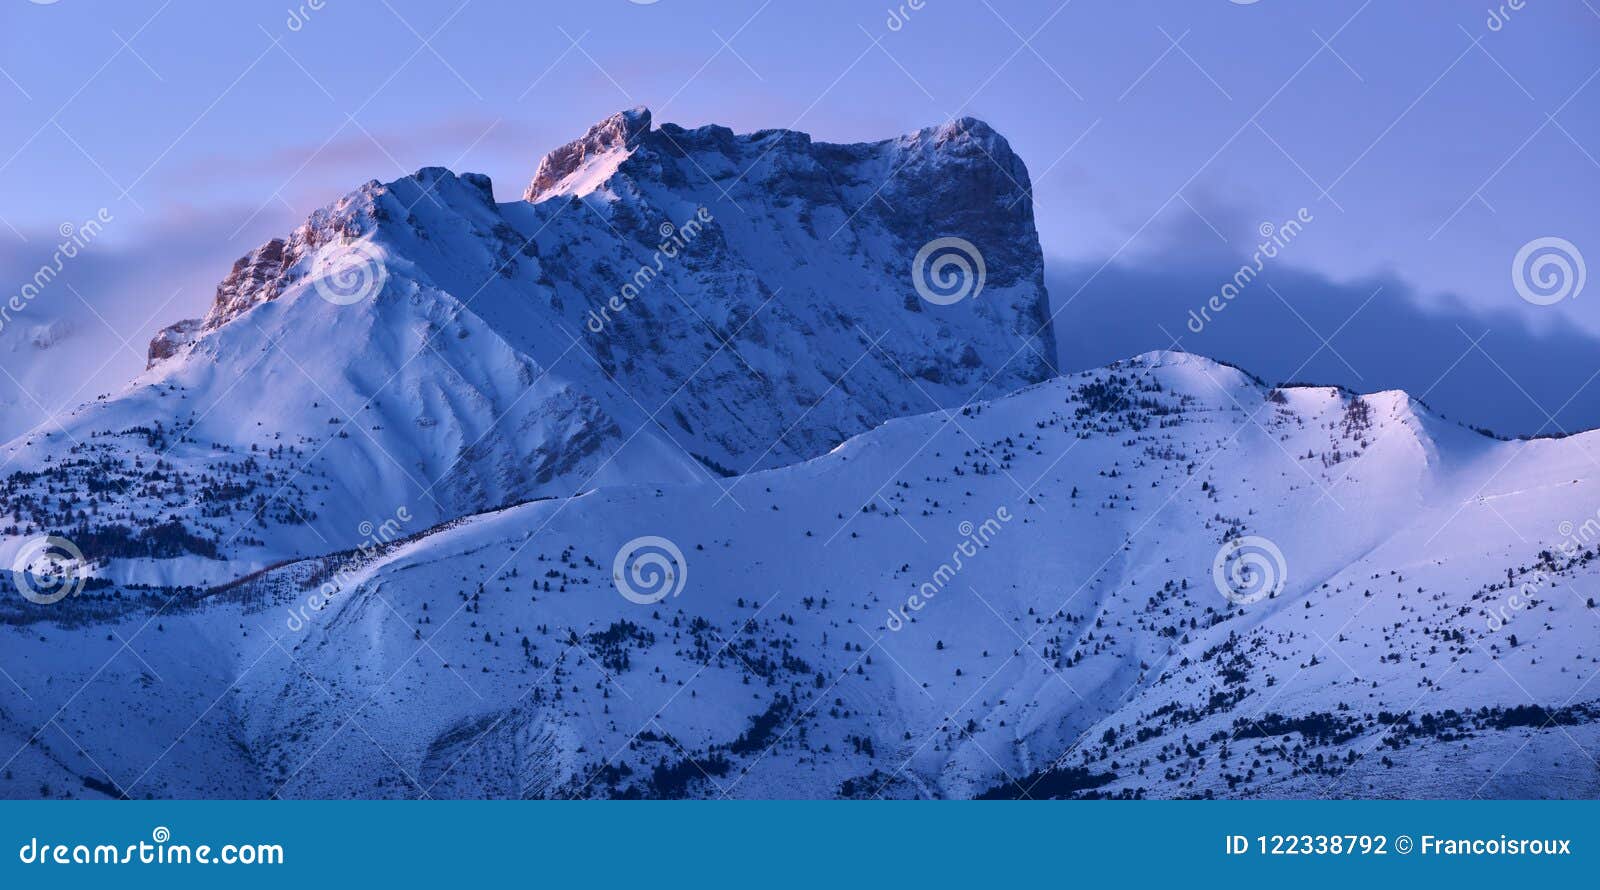 bure peak pic de bure in the devoluy mountain range at dusk in winter. hautes-alpes, alps, france